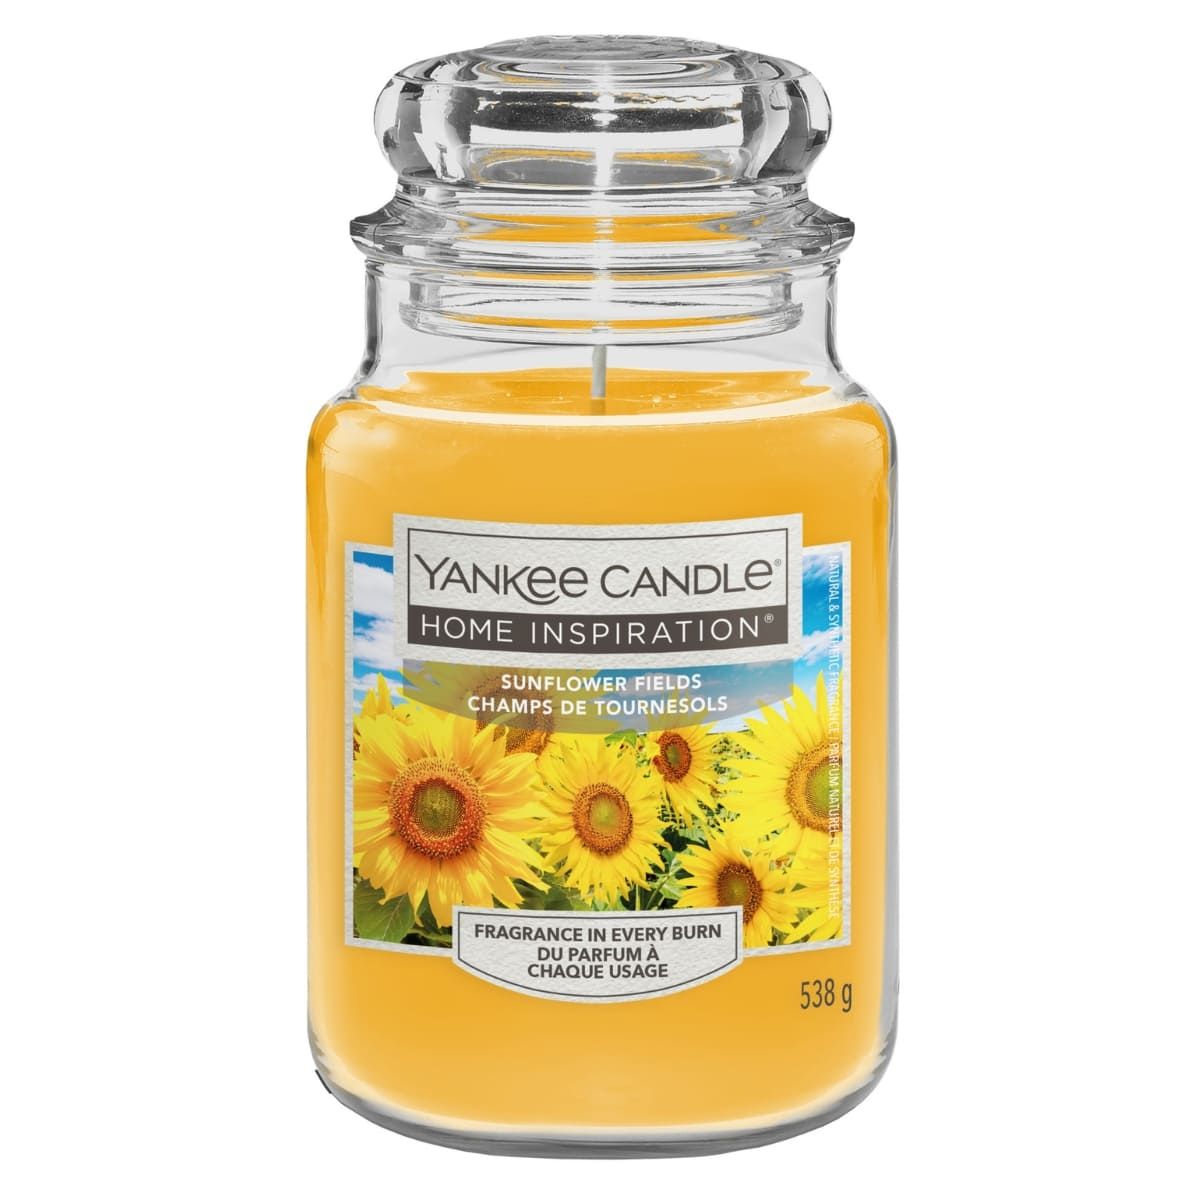 Ароматическая Свеча Yankee Candle Home Inspiration Sunflower Fields, 538 гр свеча ароматическая yankee candle tropical jungle 104 гр